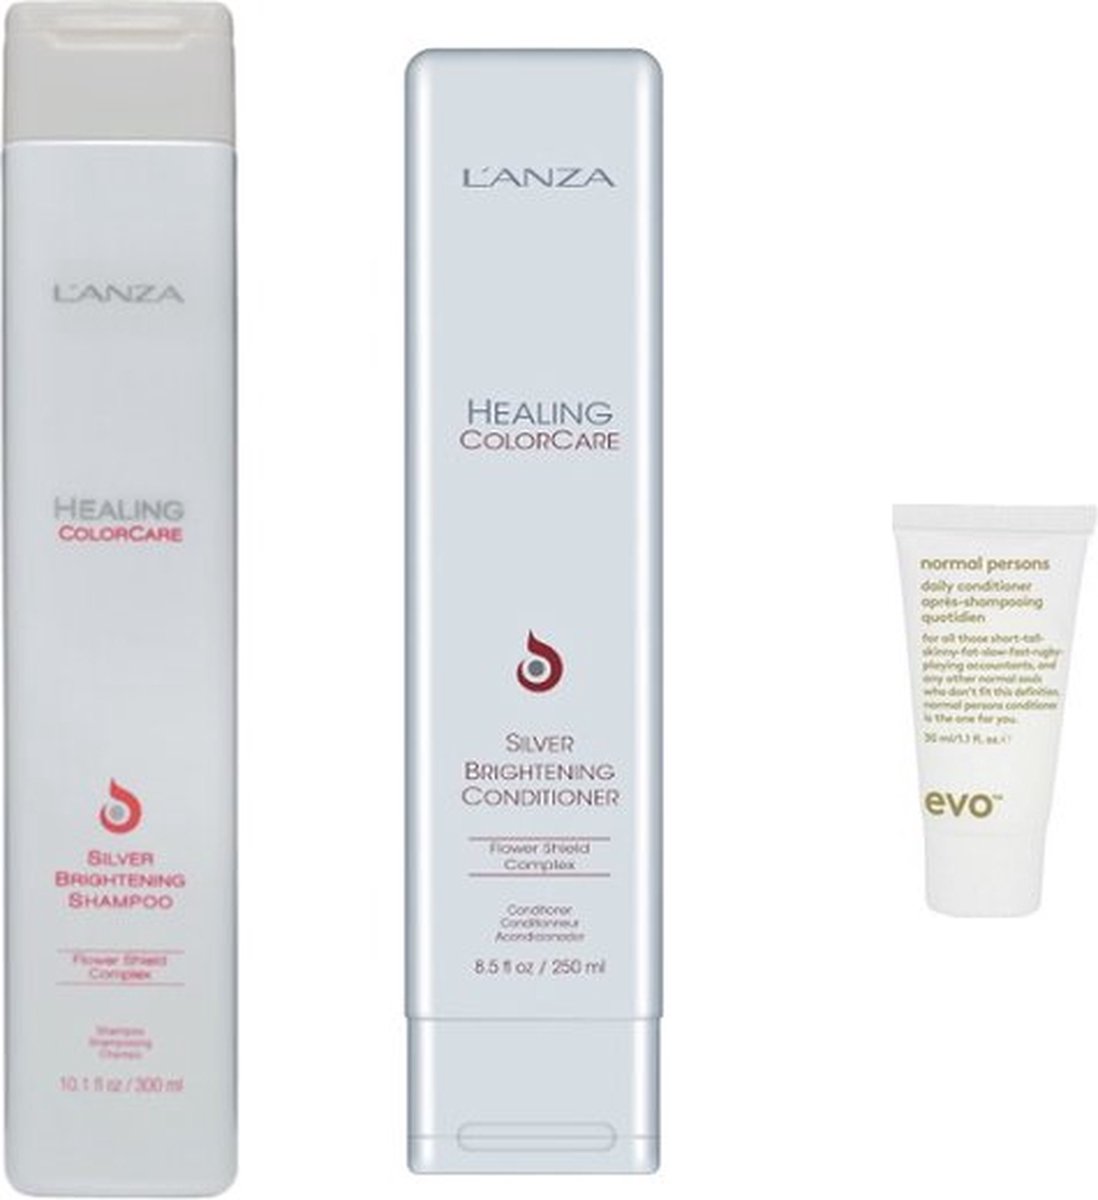 Lanza Duo Set - Silver Brightening Conditioner + Shampoo + Gratis Evo Travel Size